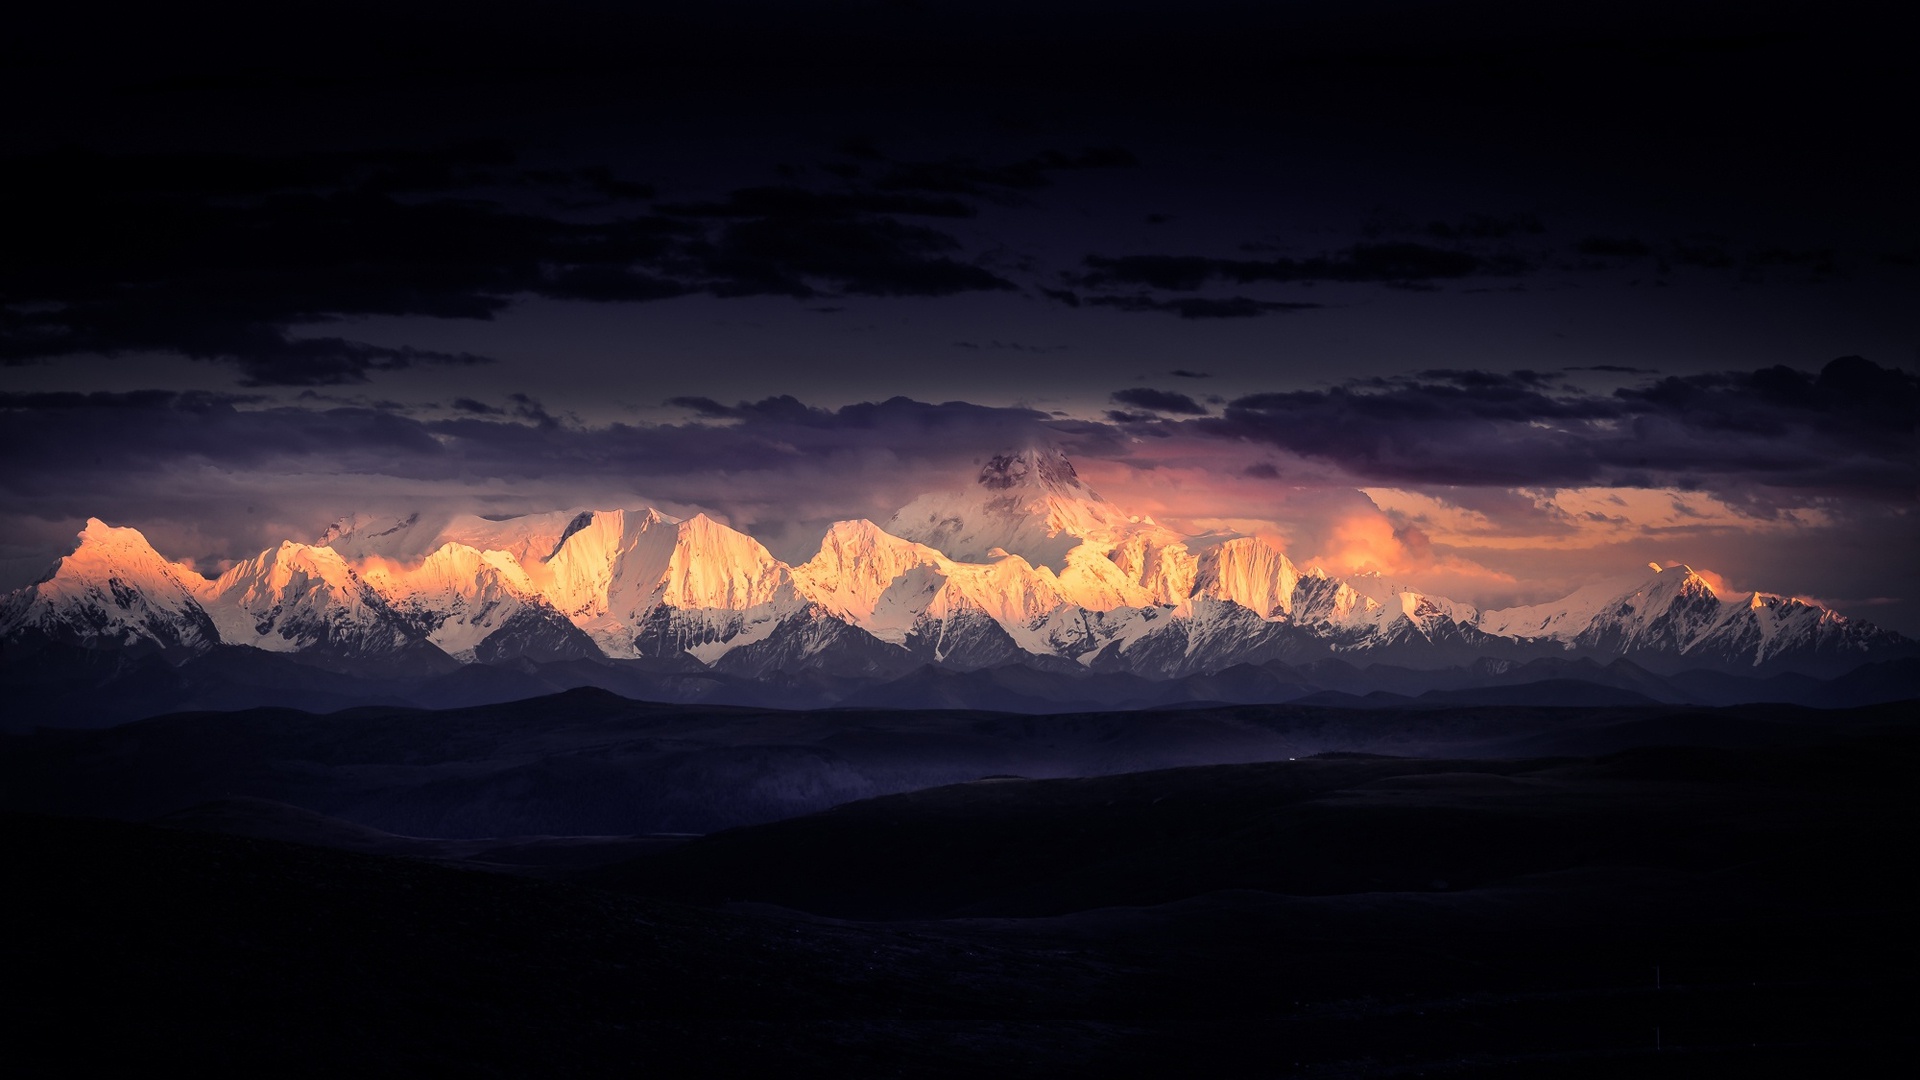 507704 descargar imagen tierra/naturaleza, himalaya, montaña, montañas: fondos de pantalla y protectores de pantalla gratis